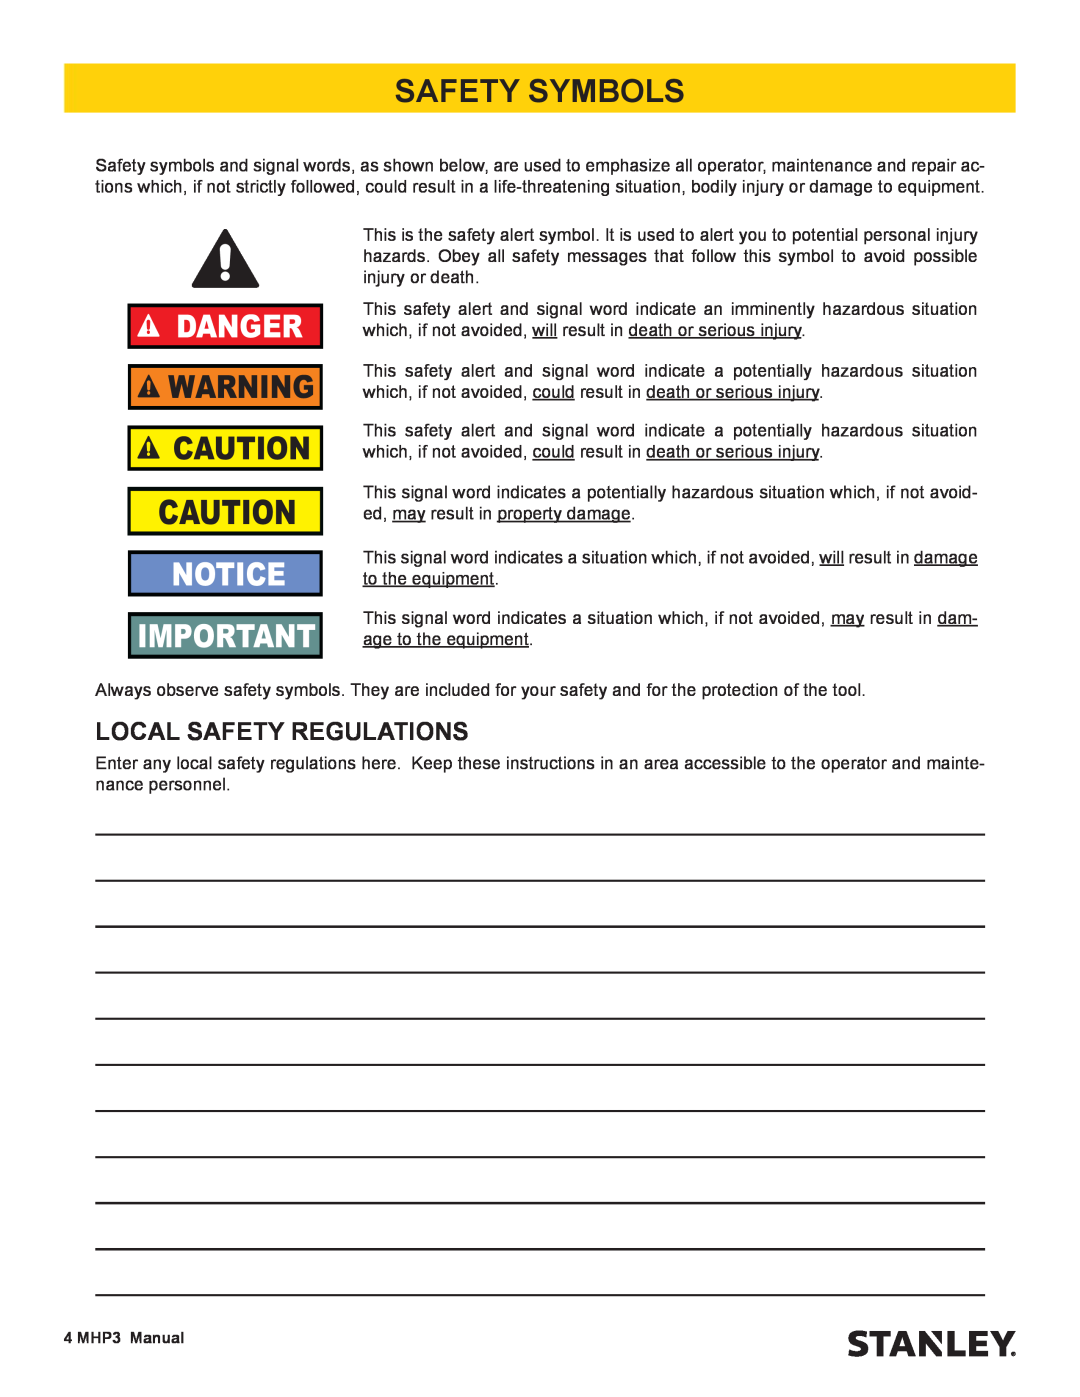 Stanley Black & Decker MHP3 user manual Safety Symbols, Local Safety Regulations, Danger 